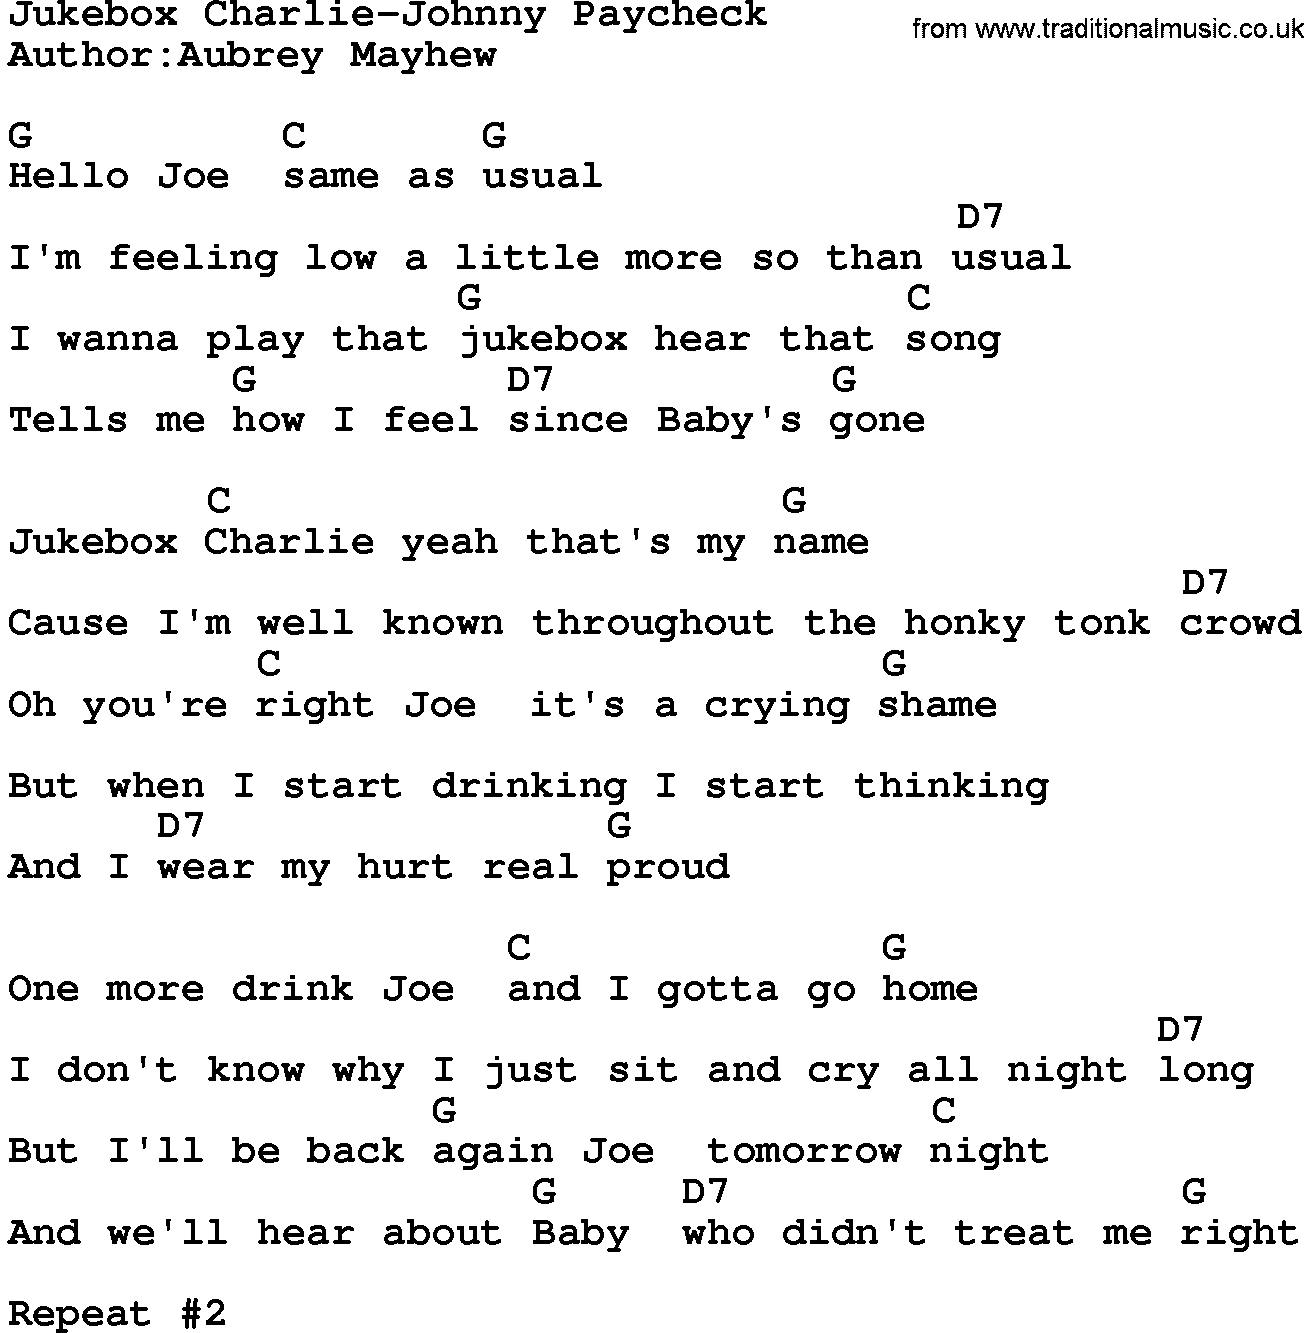 Country music song: Jukebox Charlie-Johnny Paycheck lyrics and chords